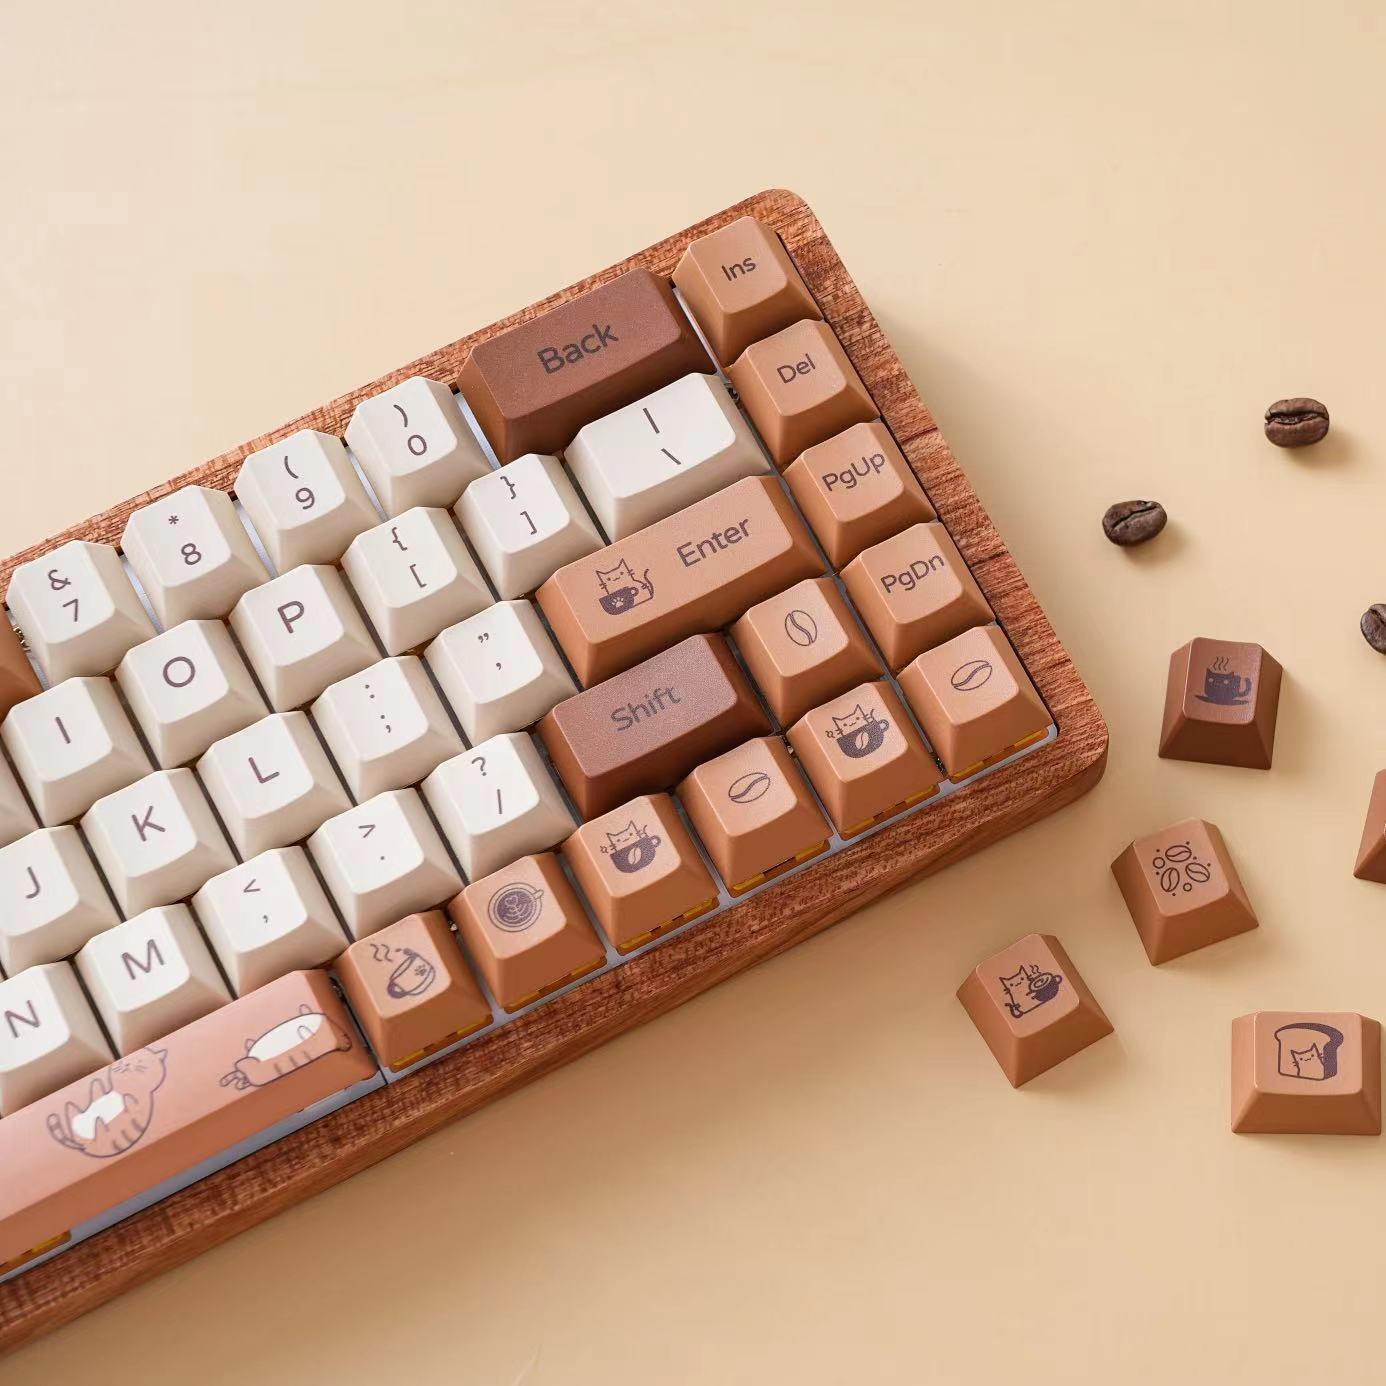 YUNZII SKYLOONG GK61 / GK68 Lite-Gasket Keyboard Kit With Wooden 